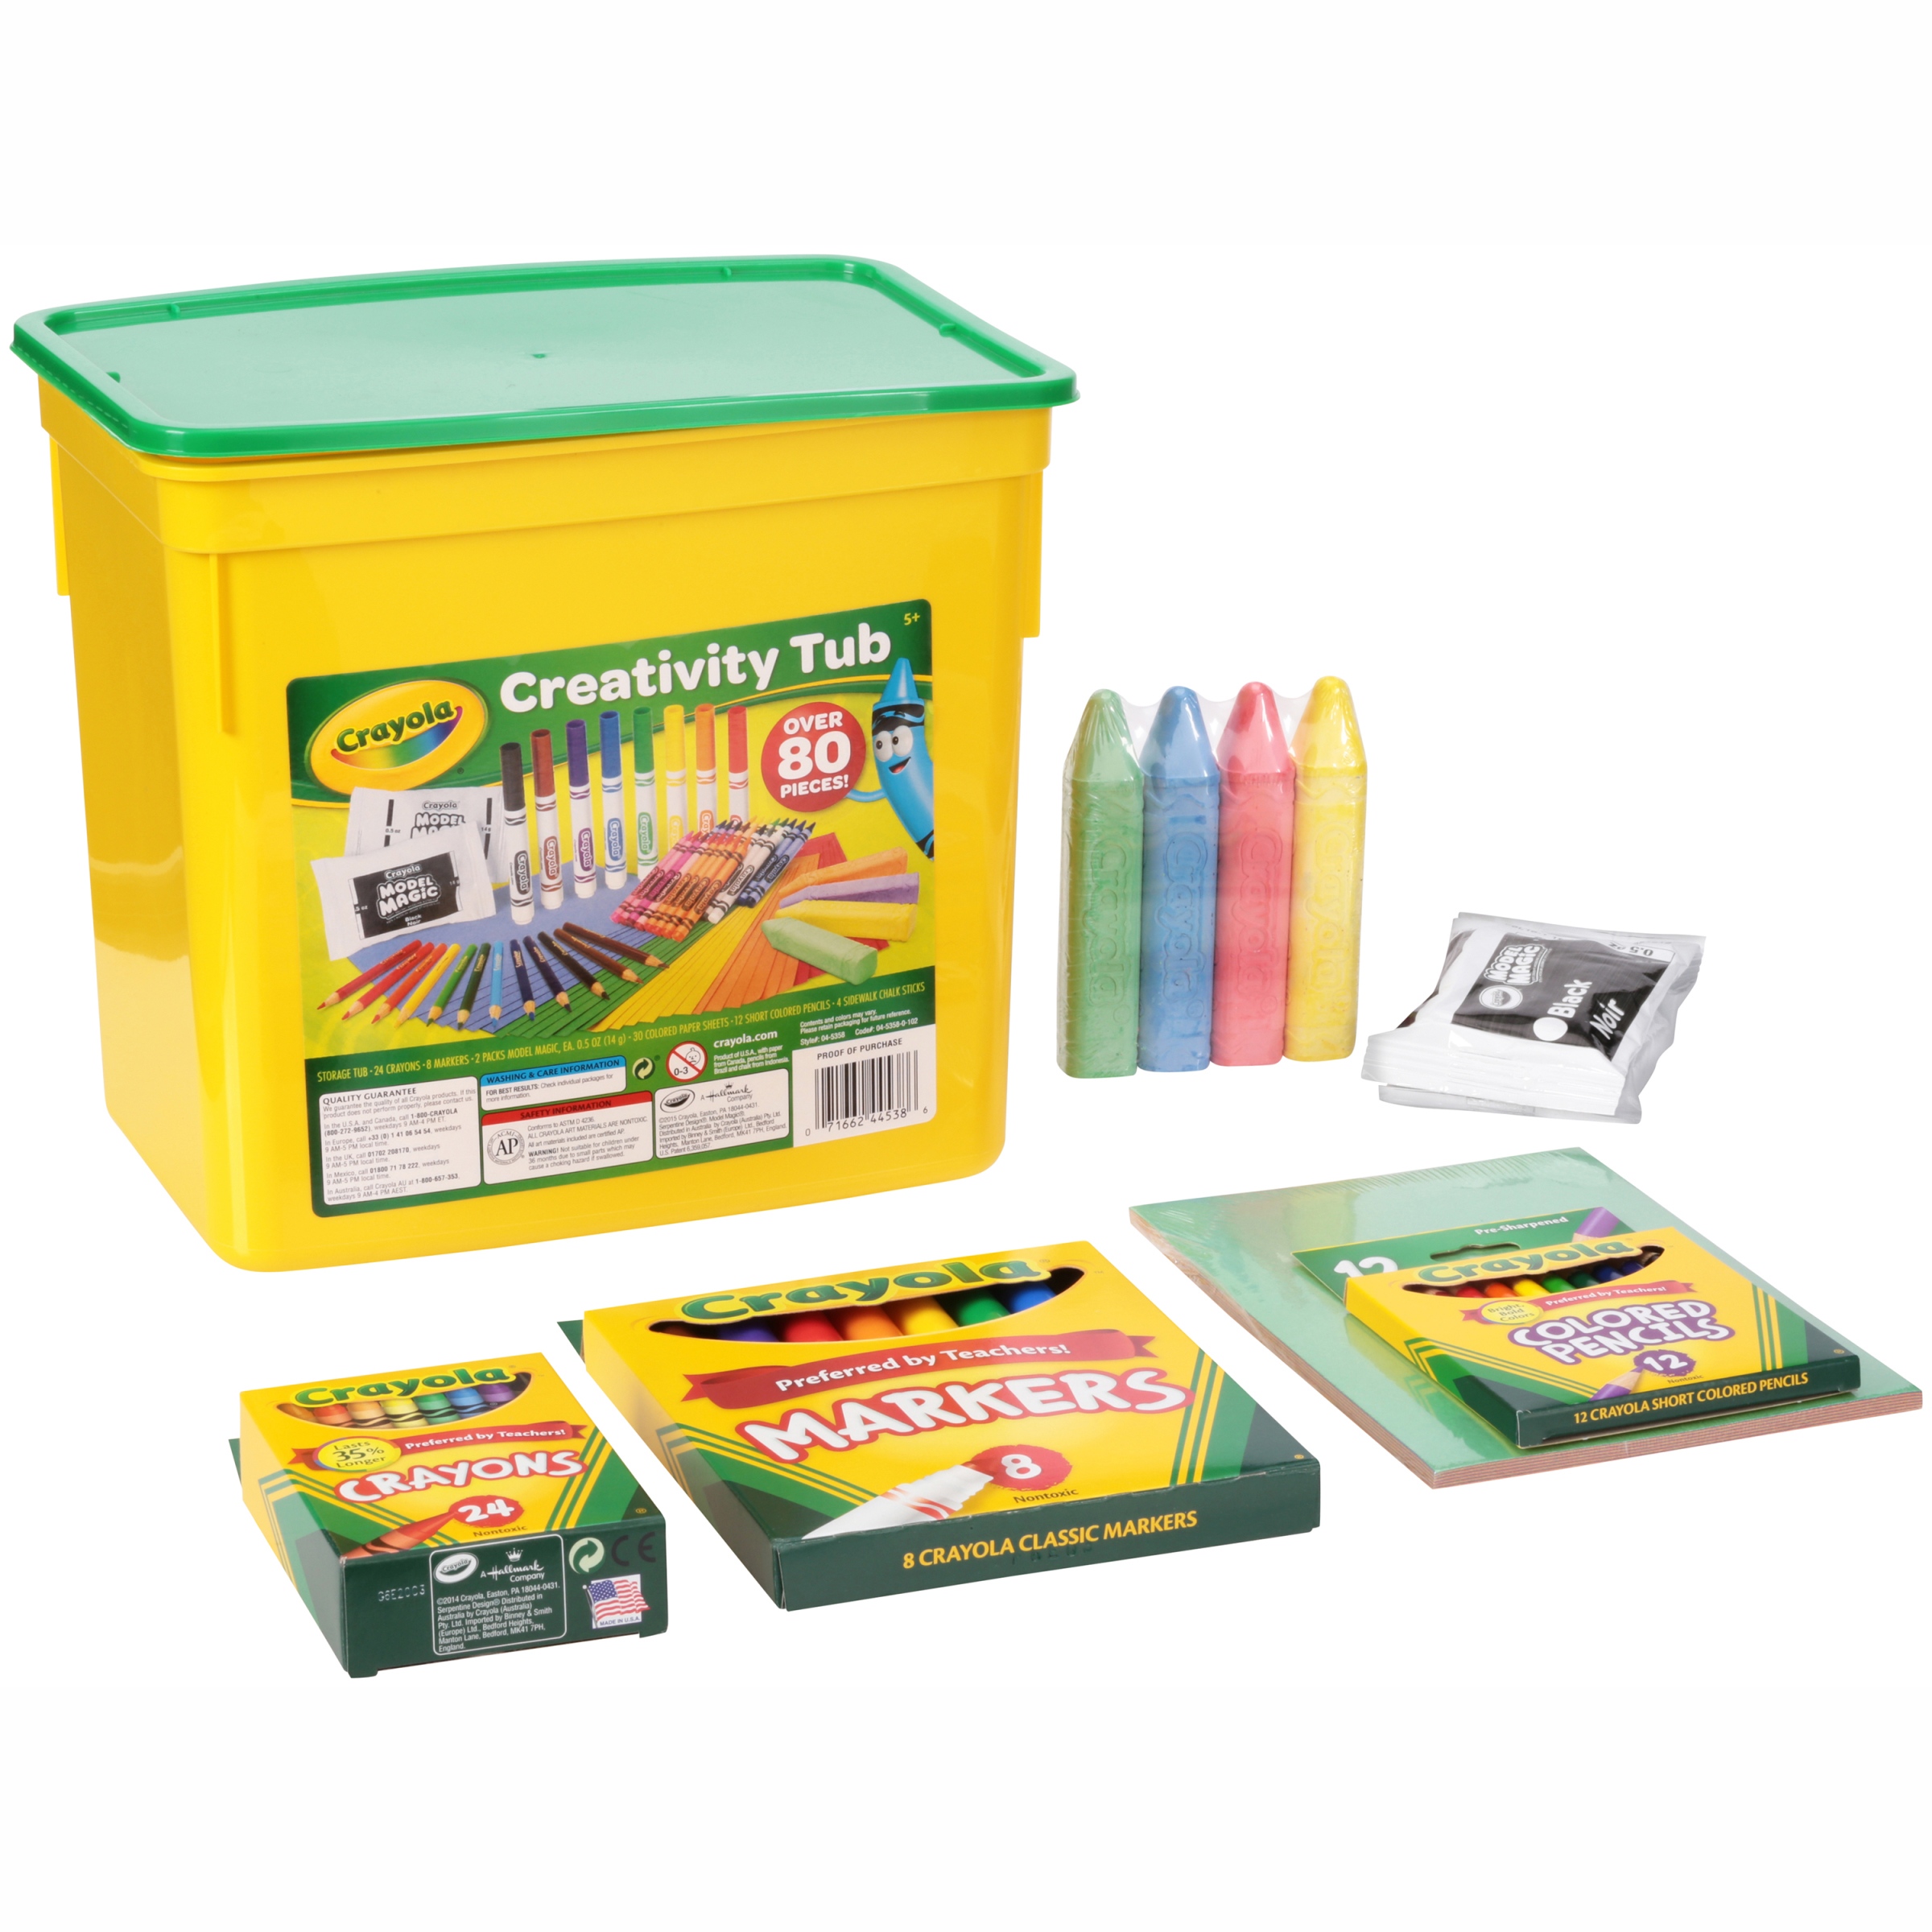 Crayola 80-pc Creativity Tub Only $9.99! (Was $15.55)